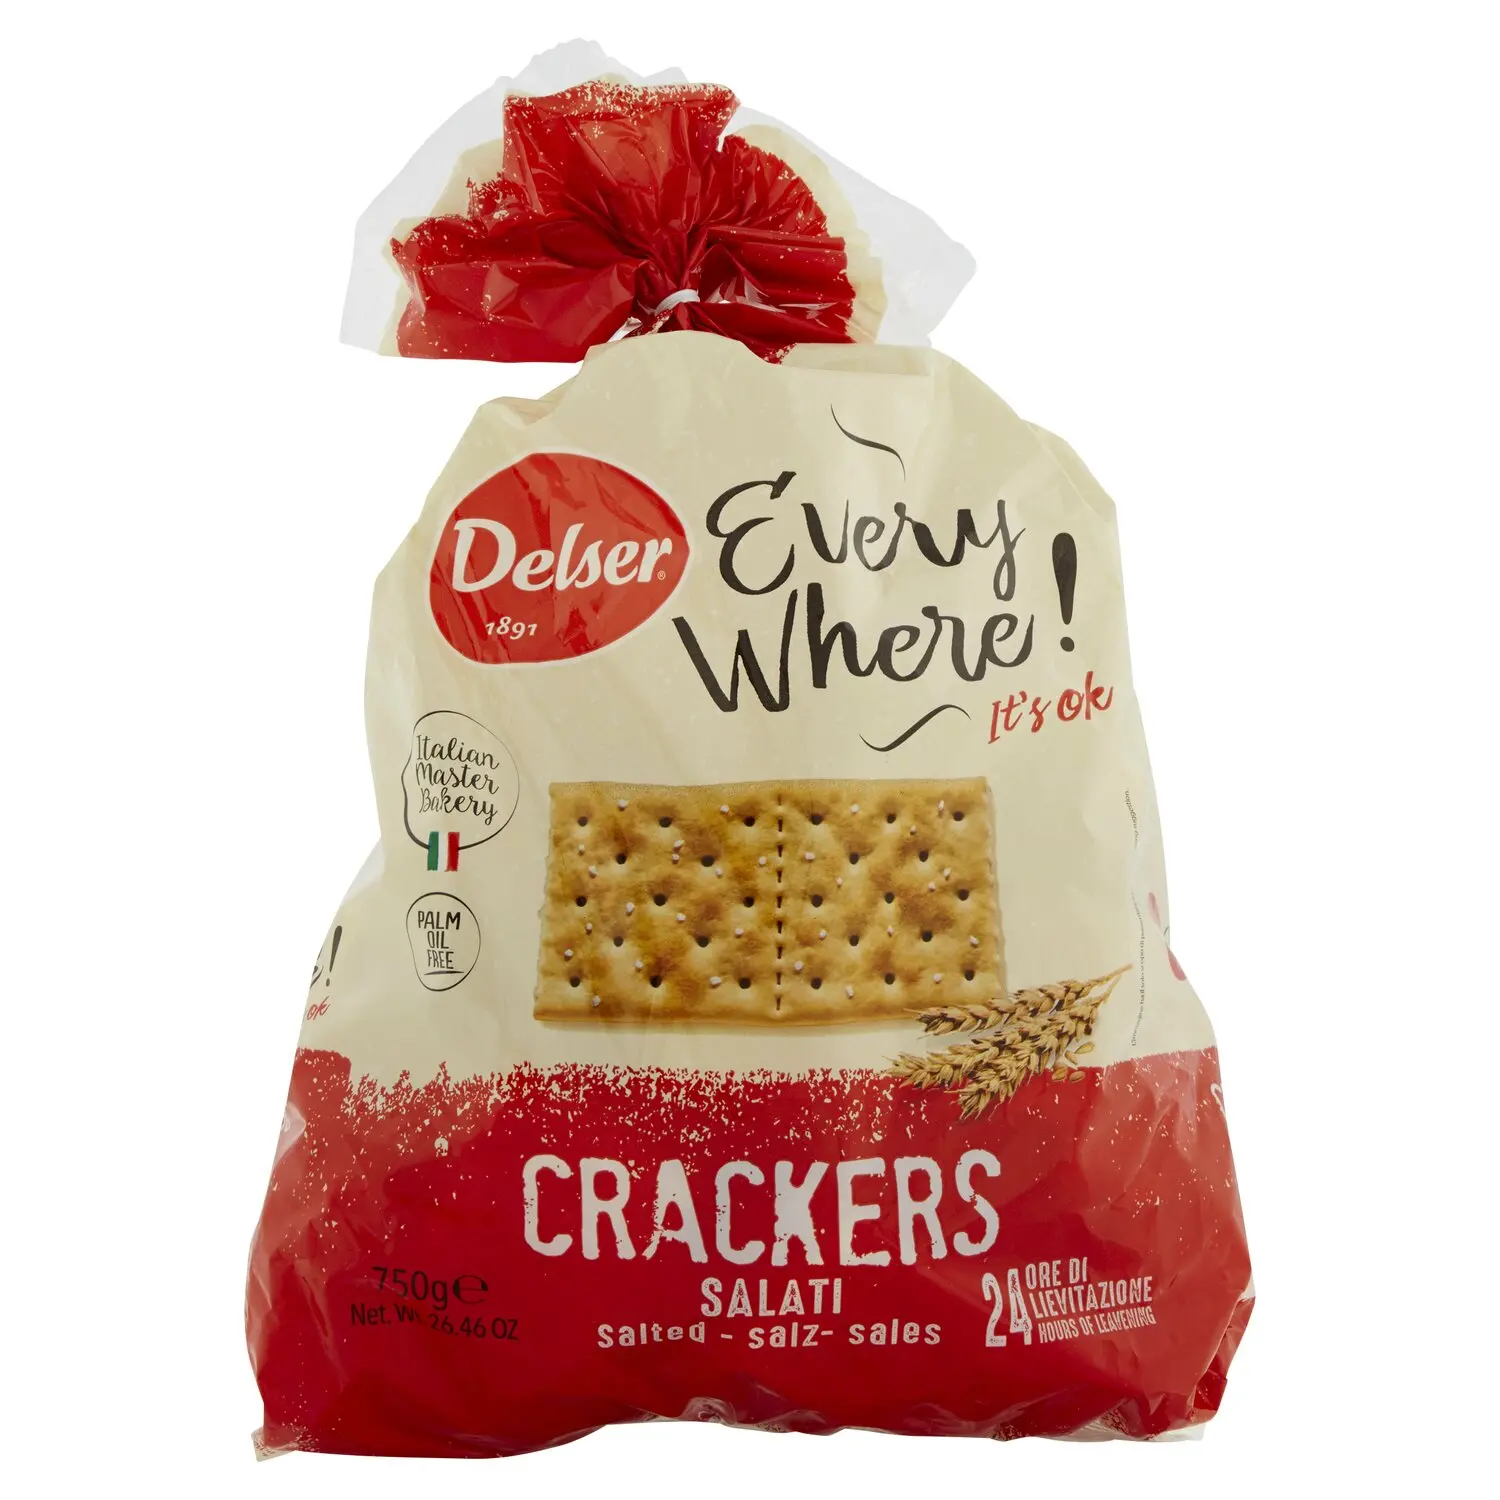 Delser Crackers Salati 750 g